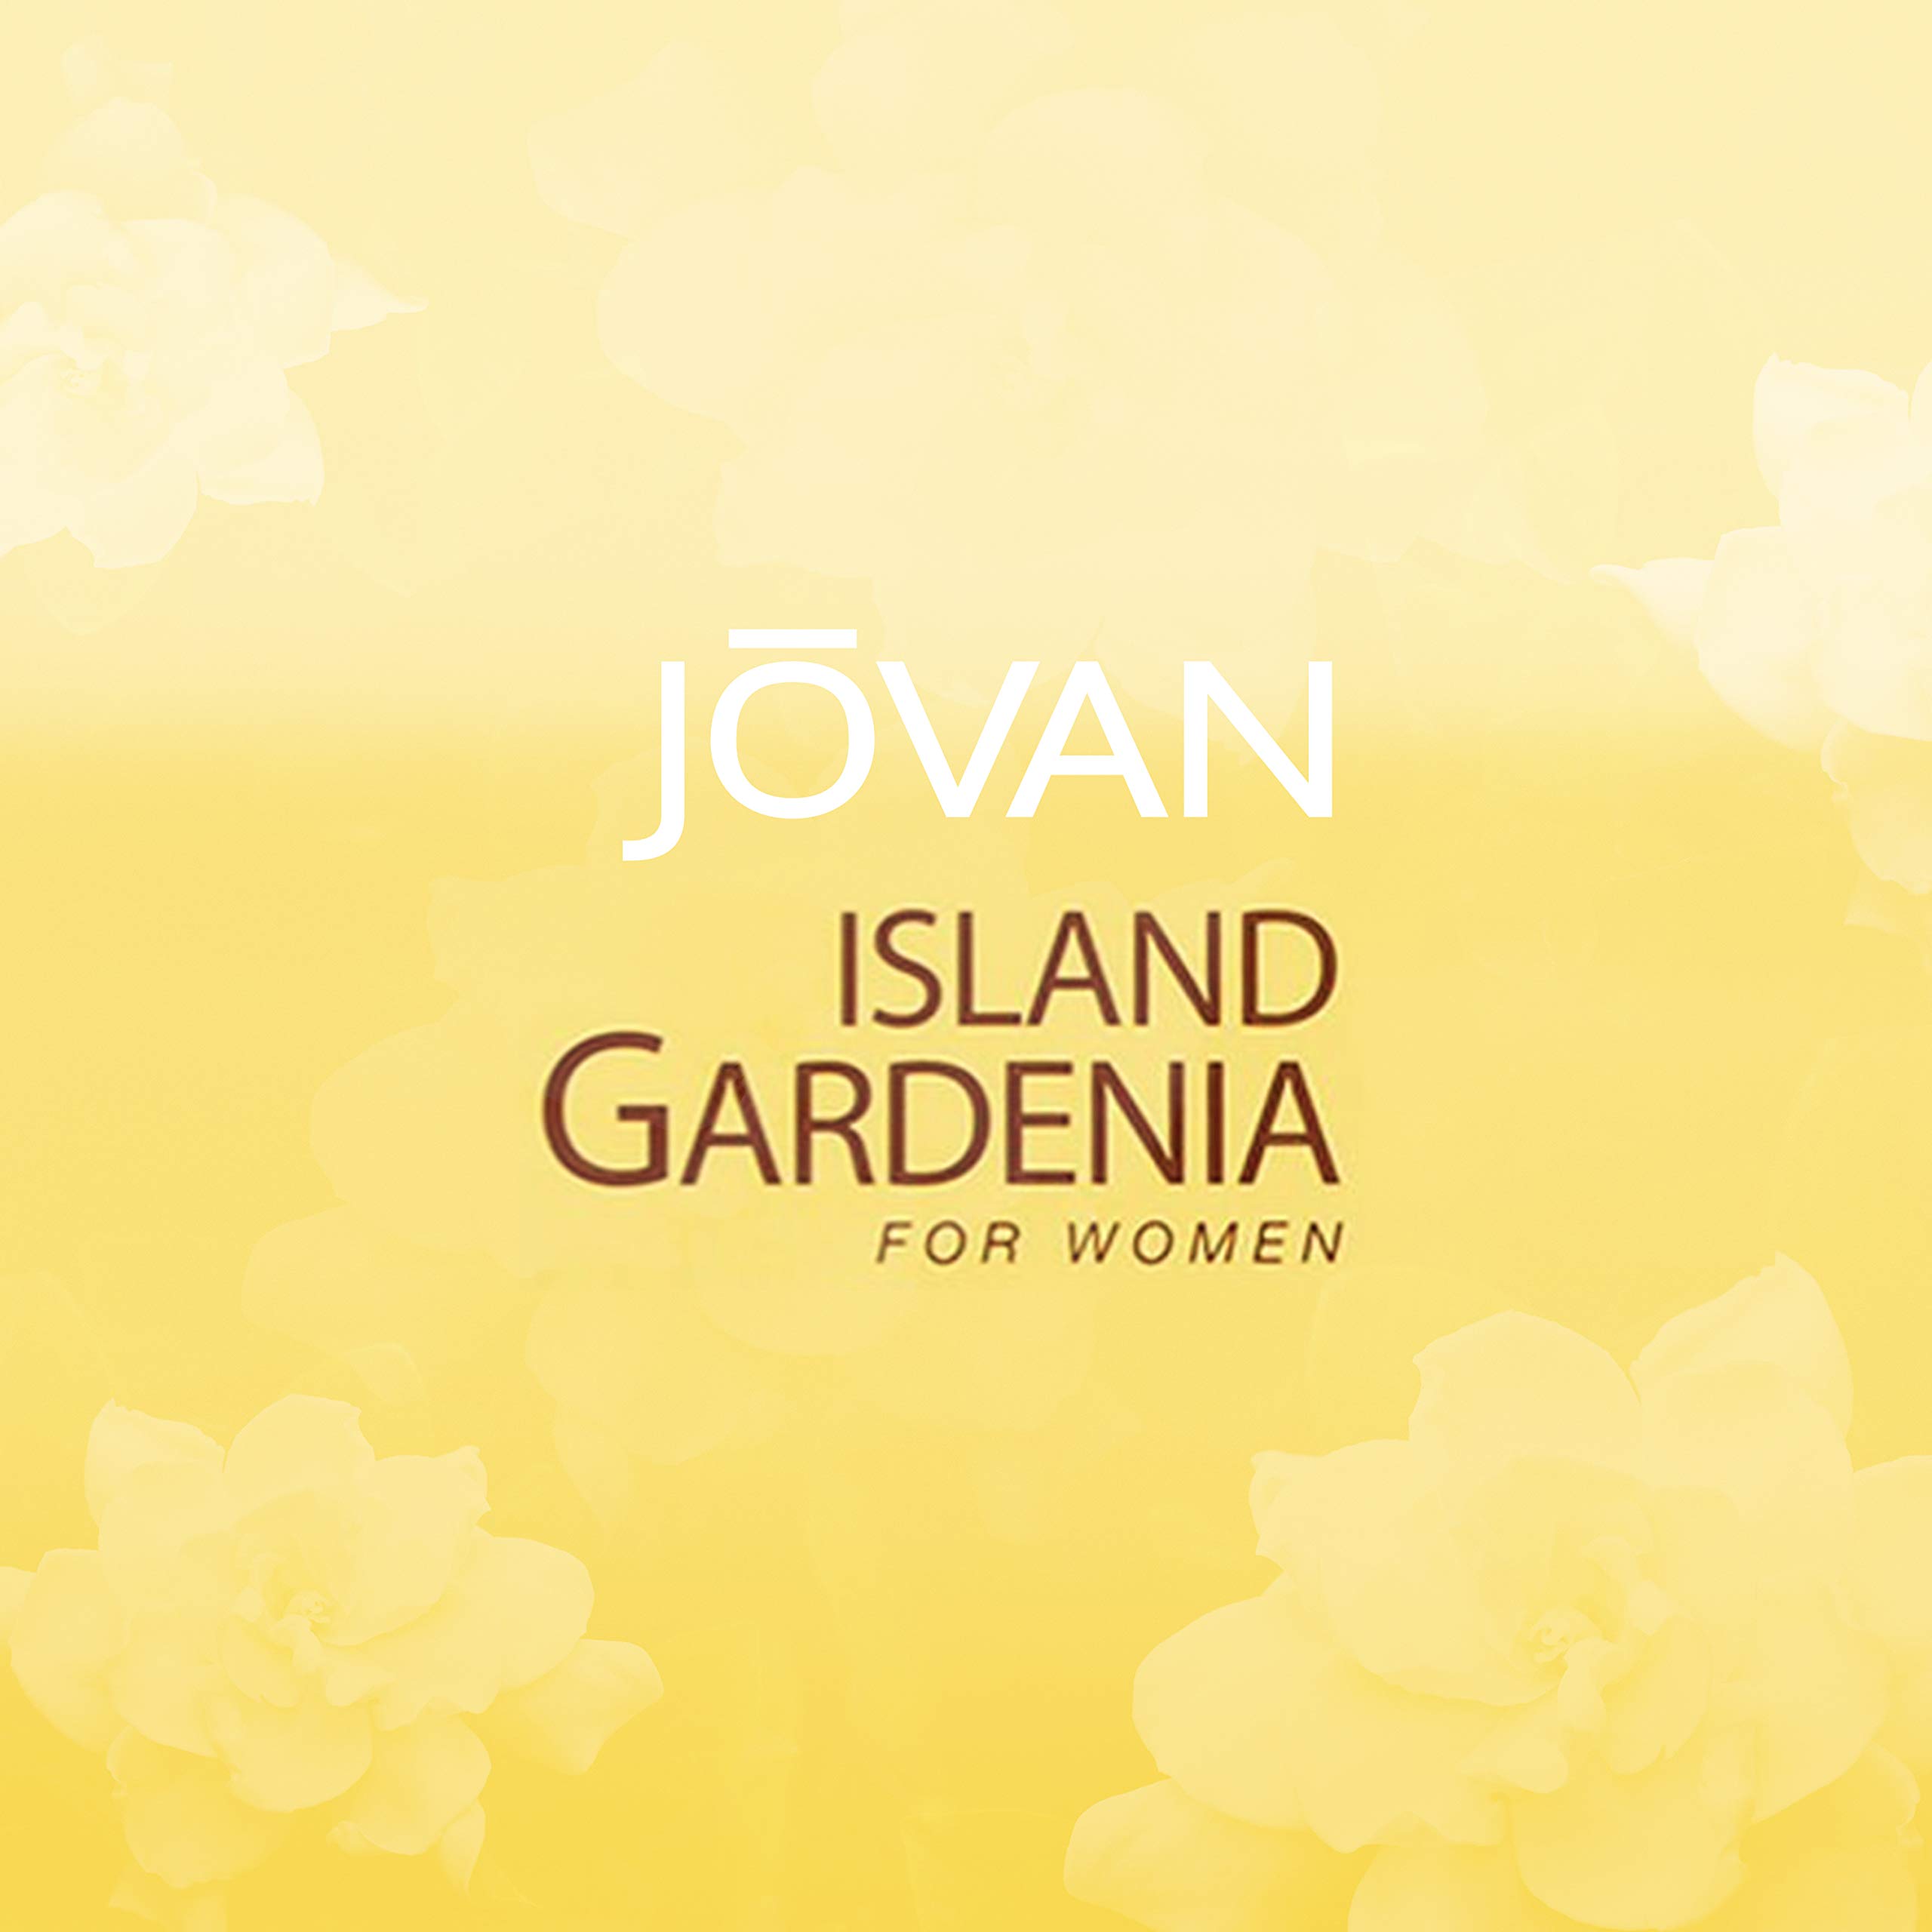 Jovan Island Gardenia Eau de Cologne Spray, Refreshing Women's Perfume, Natural Scent, Vegan Formula, 1.5oz